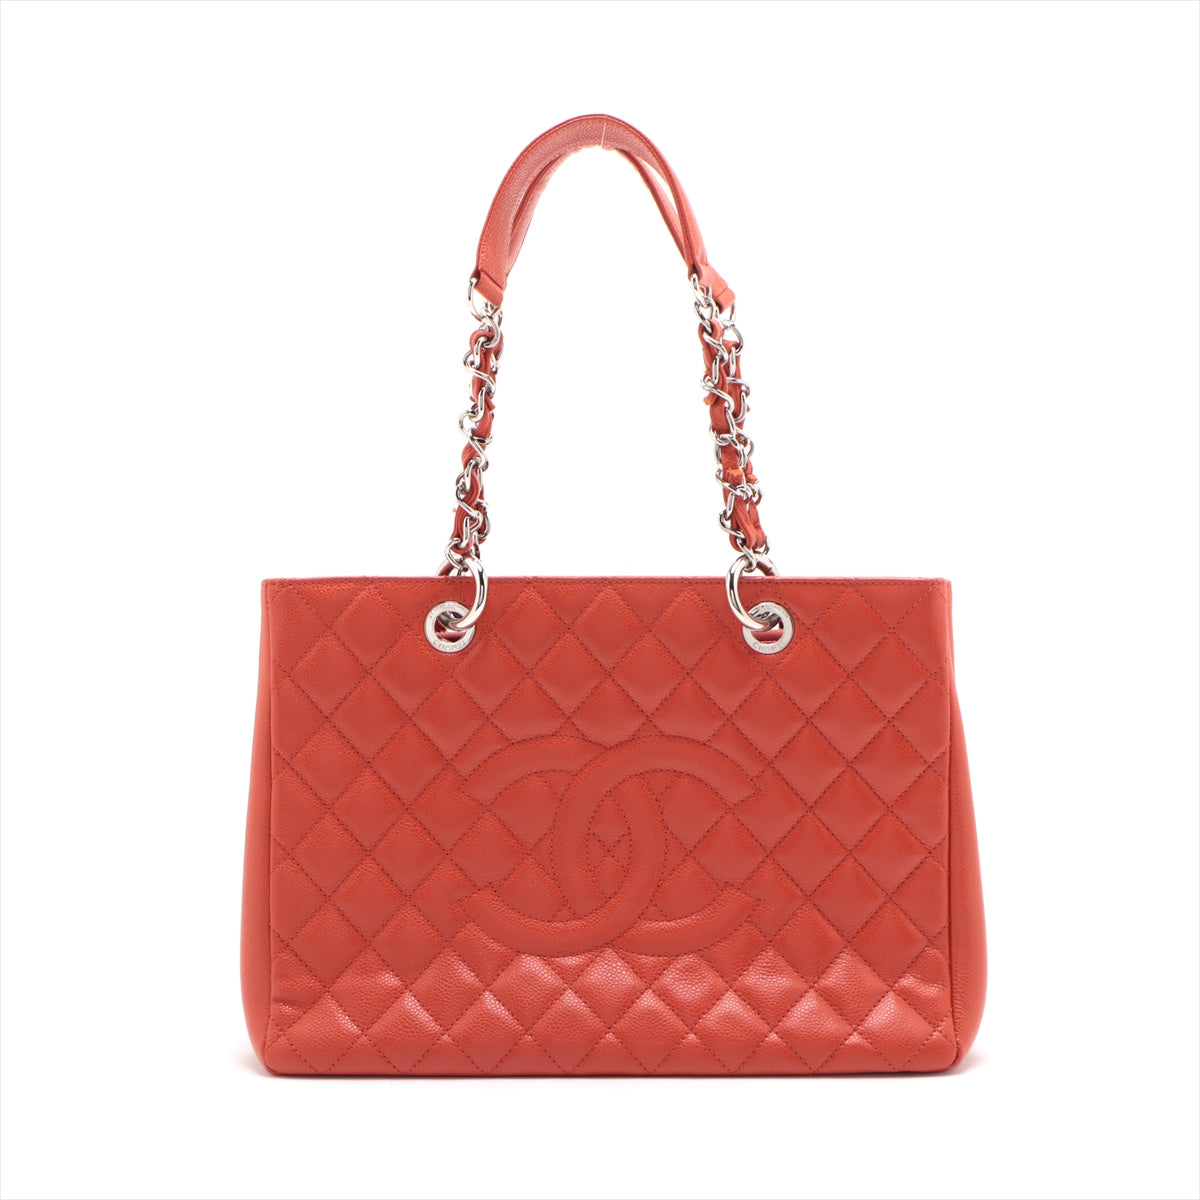 Chanel Shopping Tote 405544 | Hermès travel bag in black leather |  FonjepShops